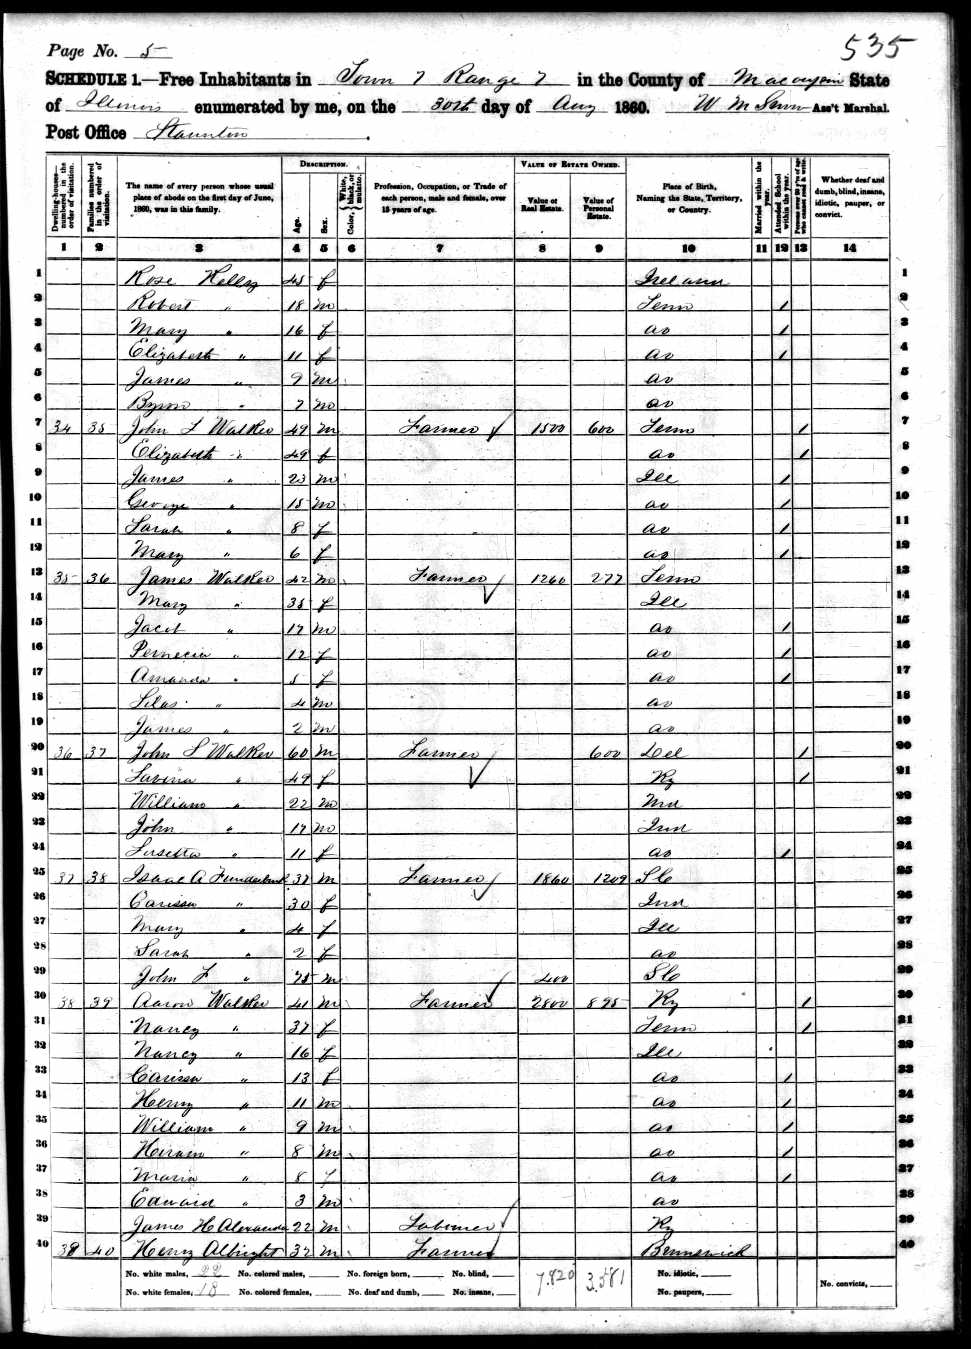 Aaron Walker, 1860 Macoupin County, Illinois, census